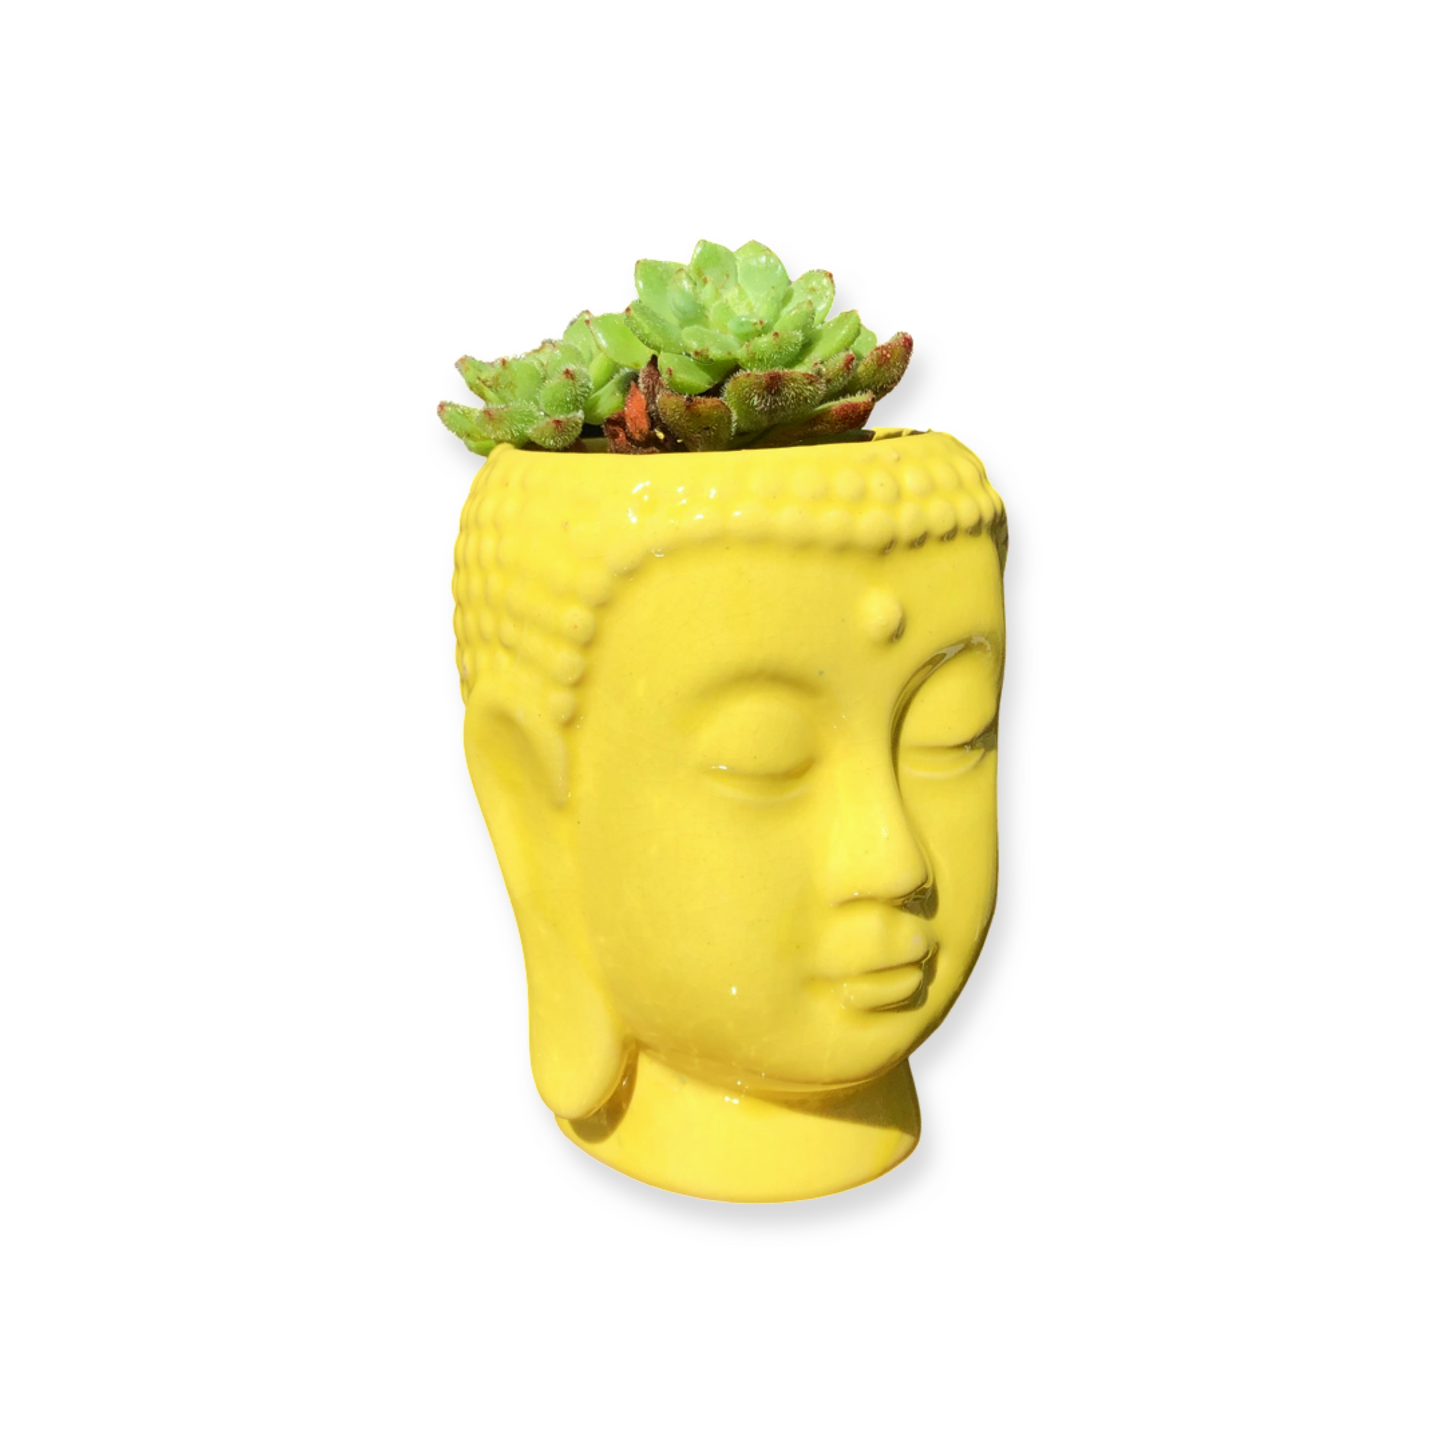 Buddha Pot and Plant